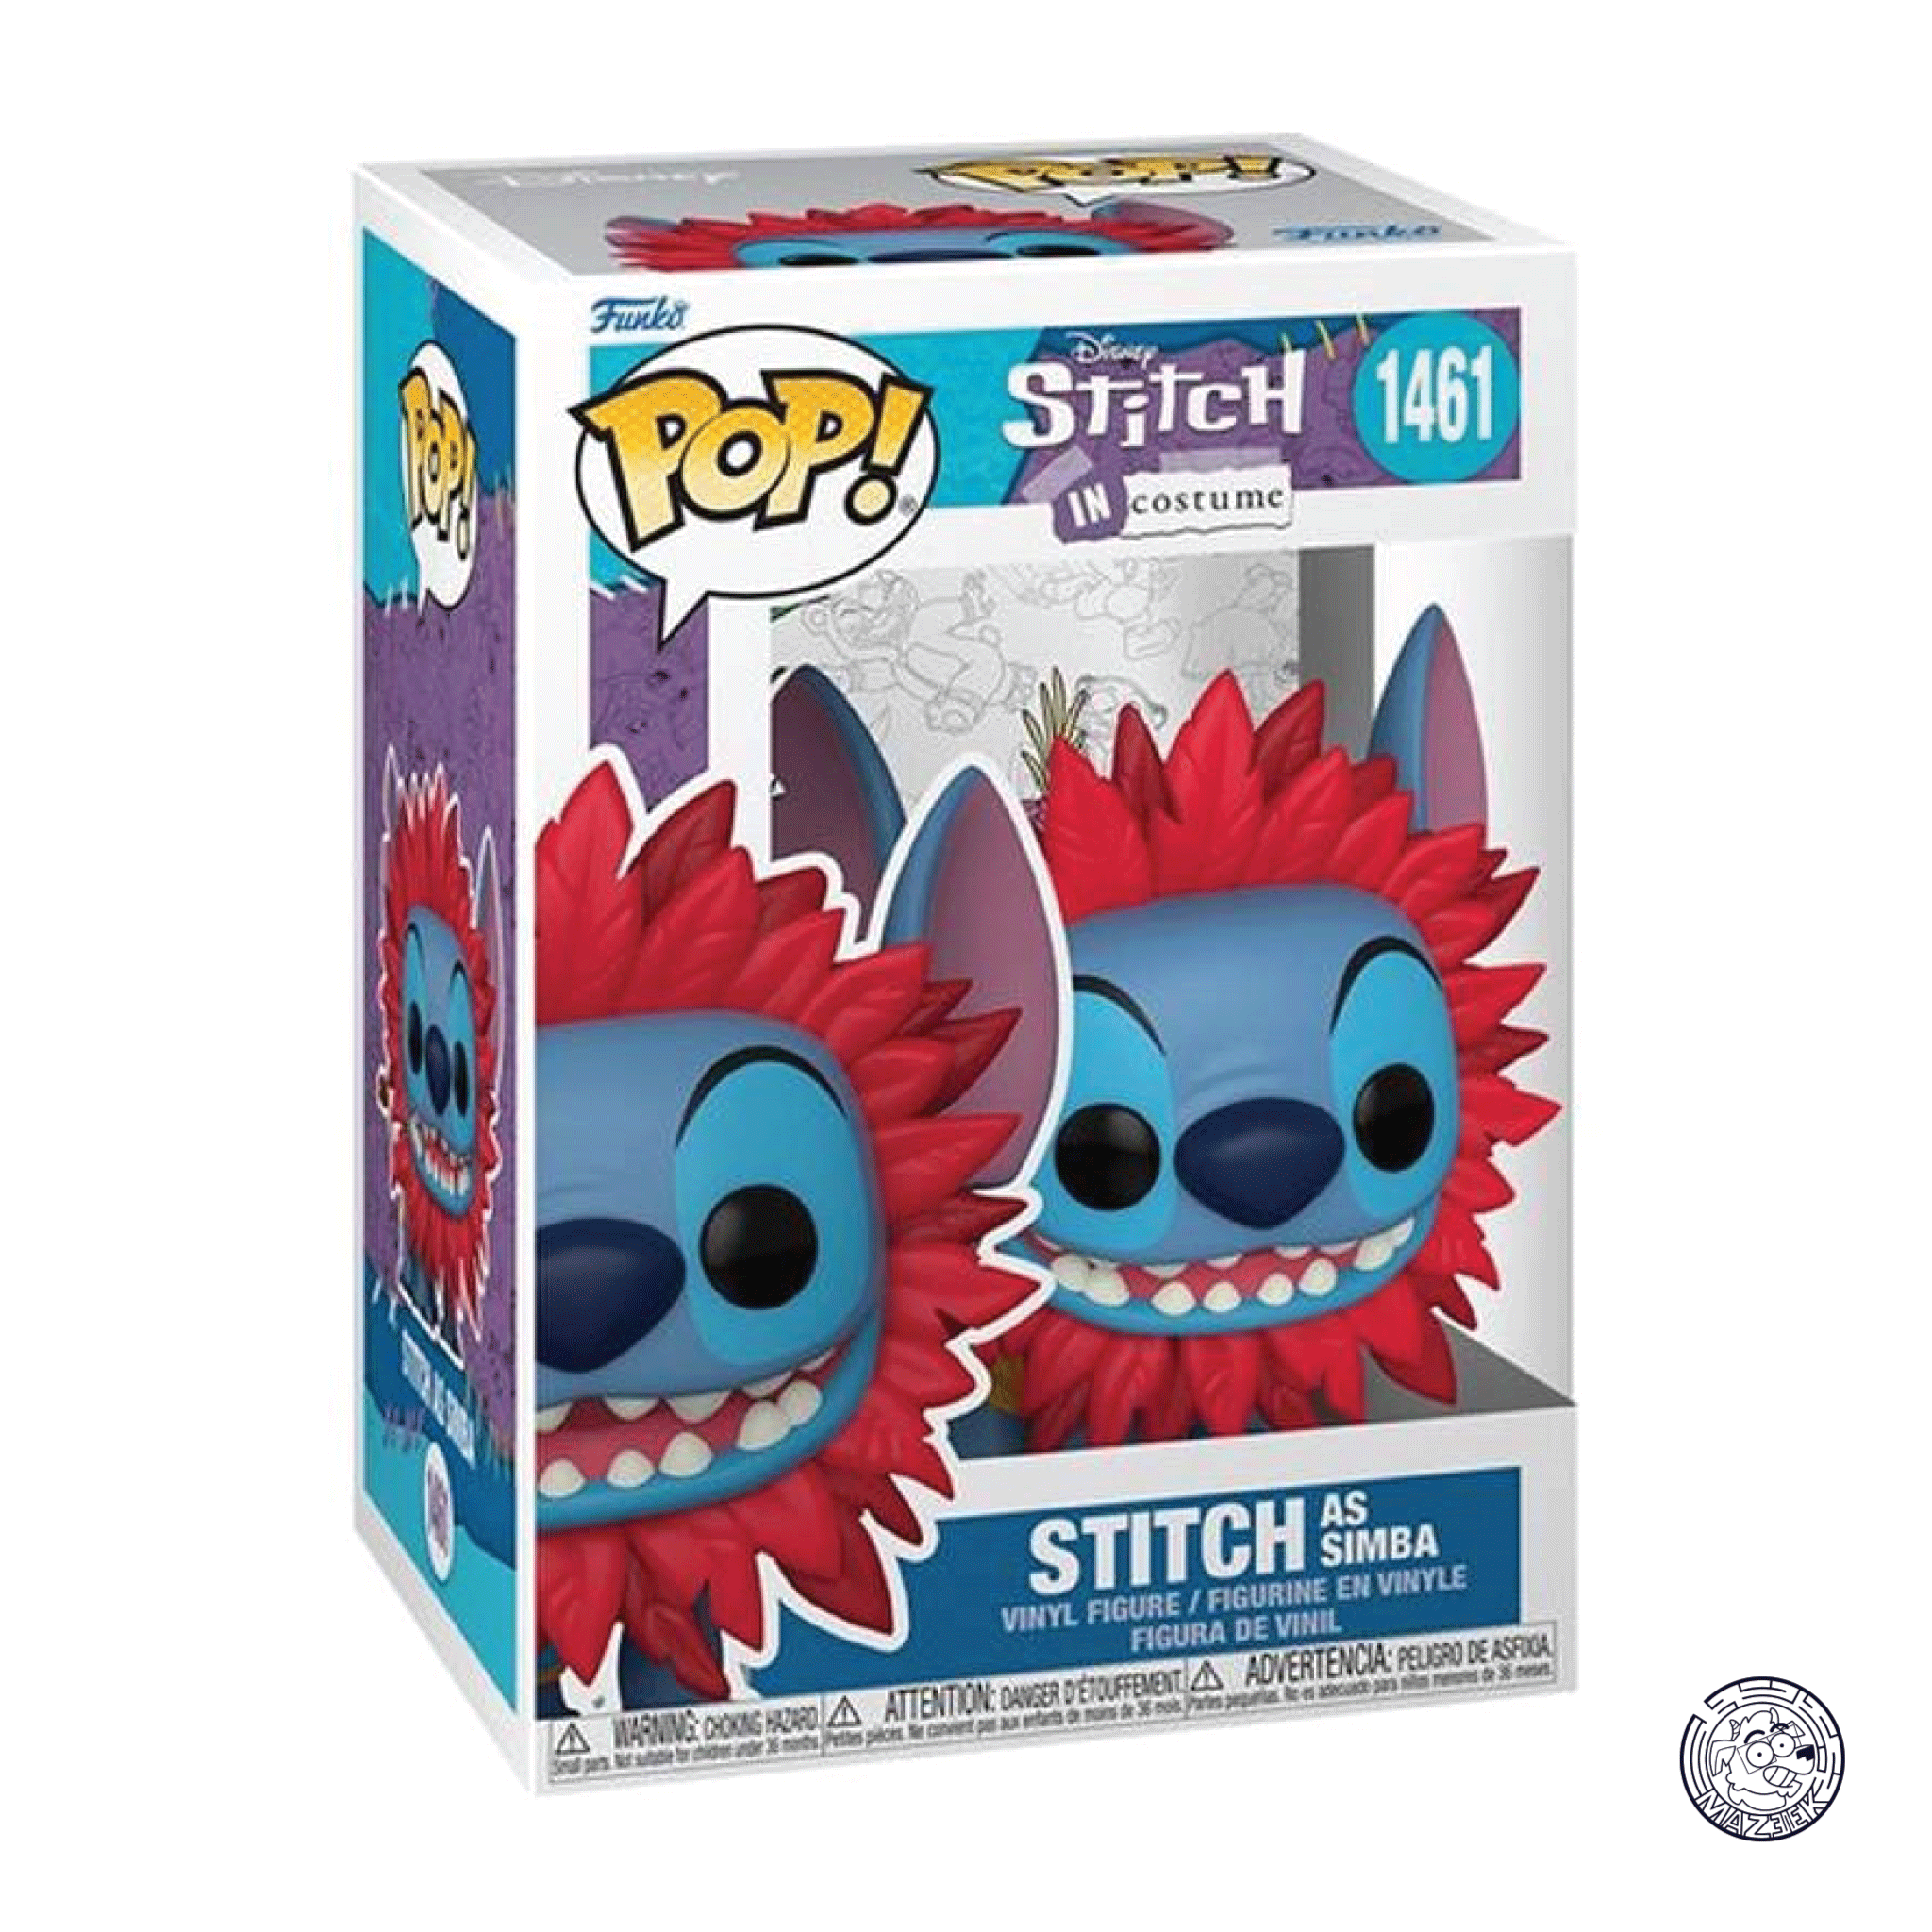 Funko POP! Stitch in Costume: Stitch as Simba 1461